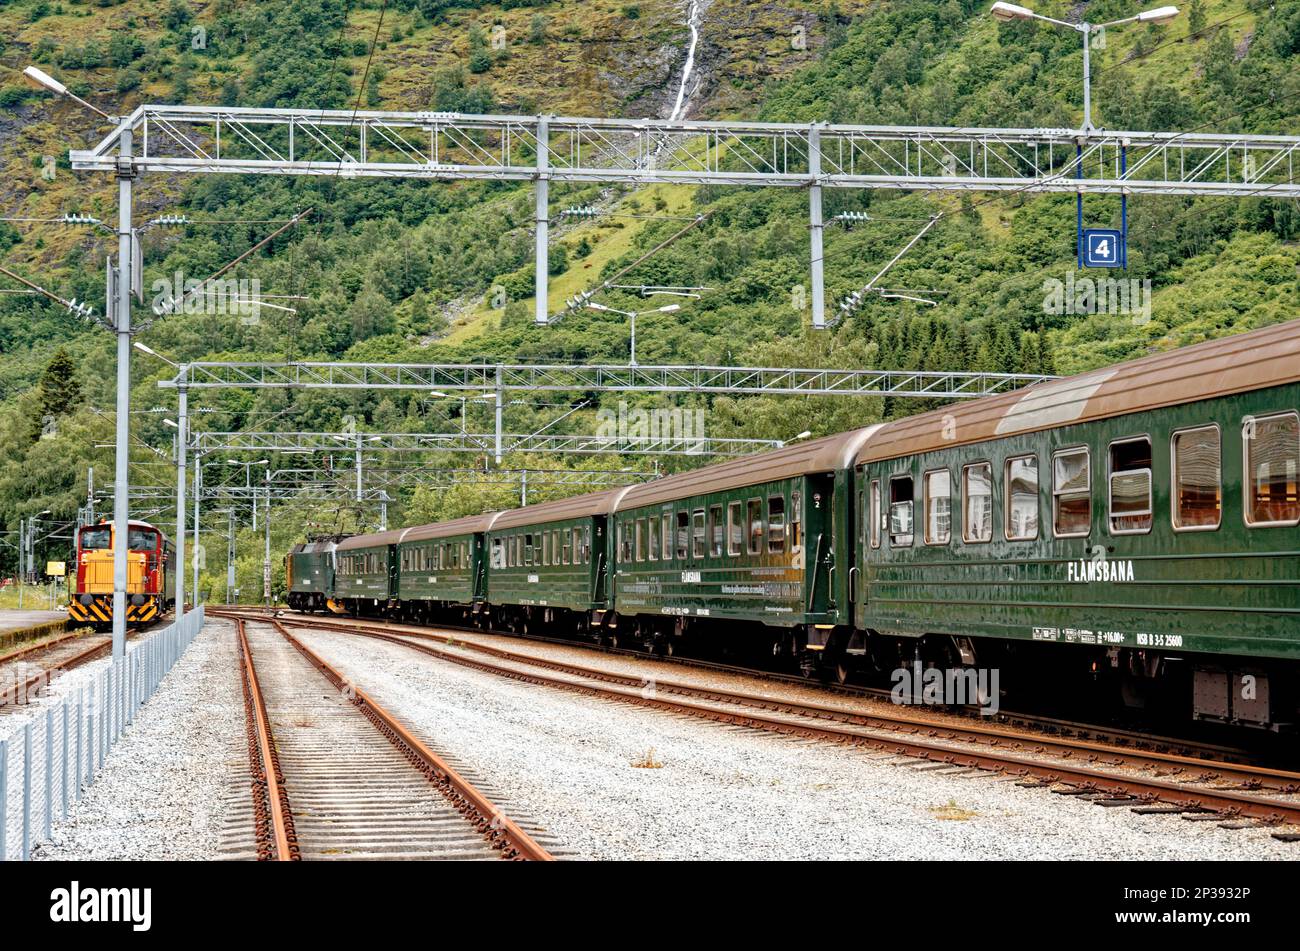 Travel destination north of Europe: Flam Line train (Flamsbana) at the railway station in Flam, Aurlandsfjorden, Sognefjord, Sogn og Fjordane, Norway. Stock Photo